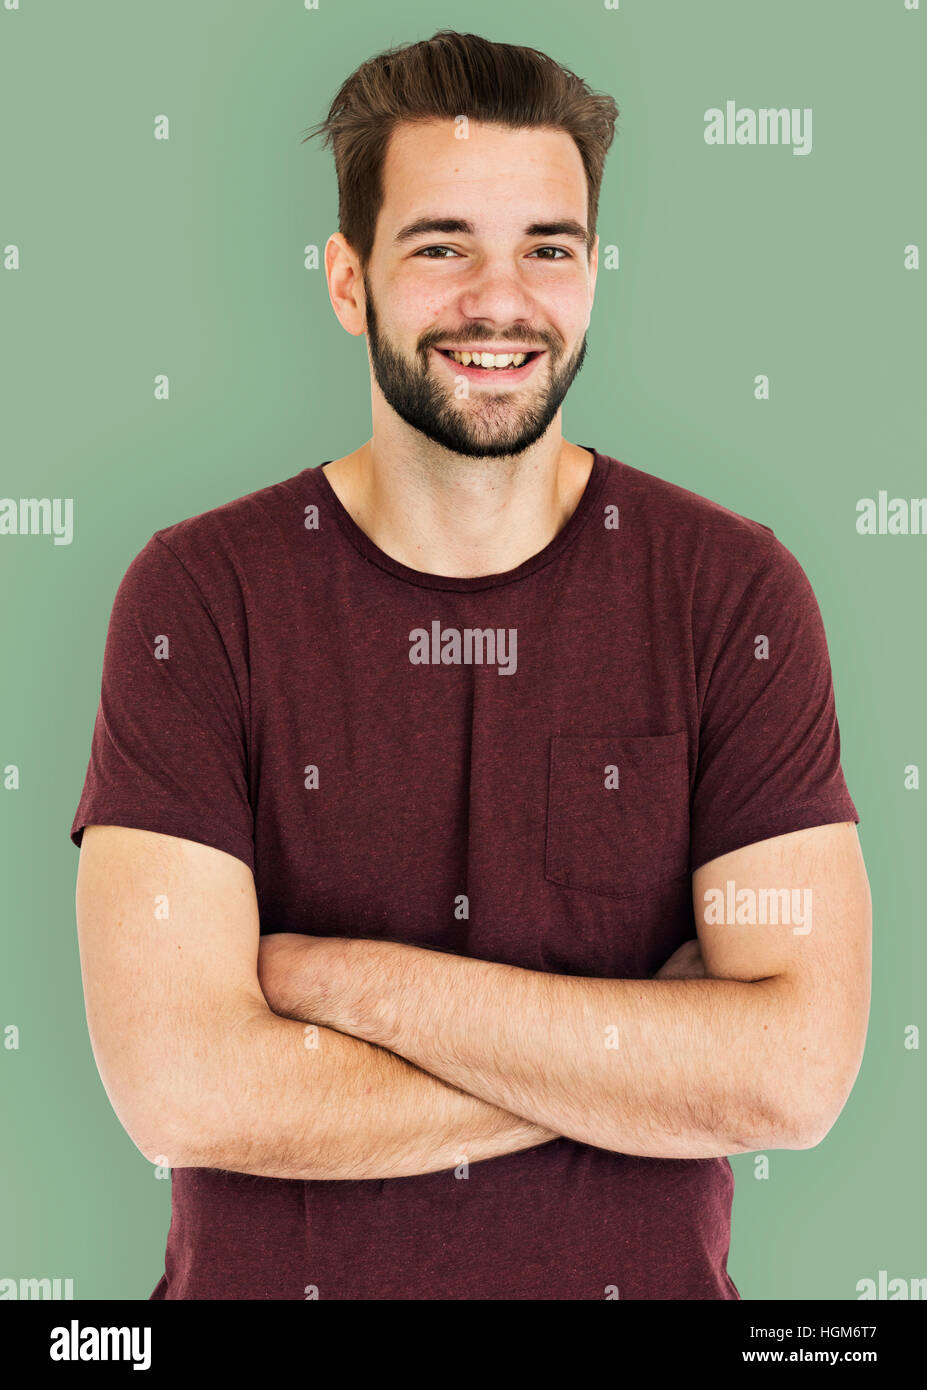 Man Smiling Happiness Portrait Concept Stock Photo